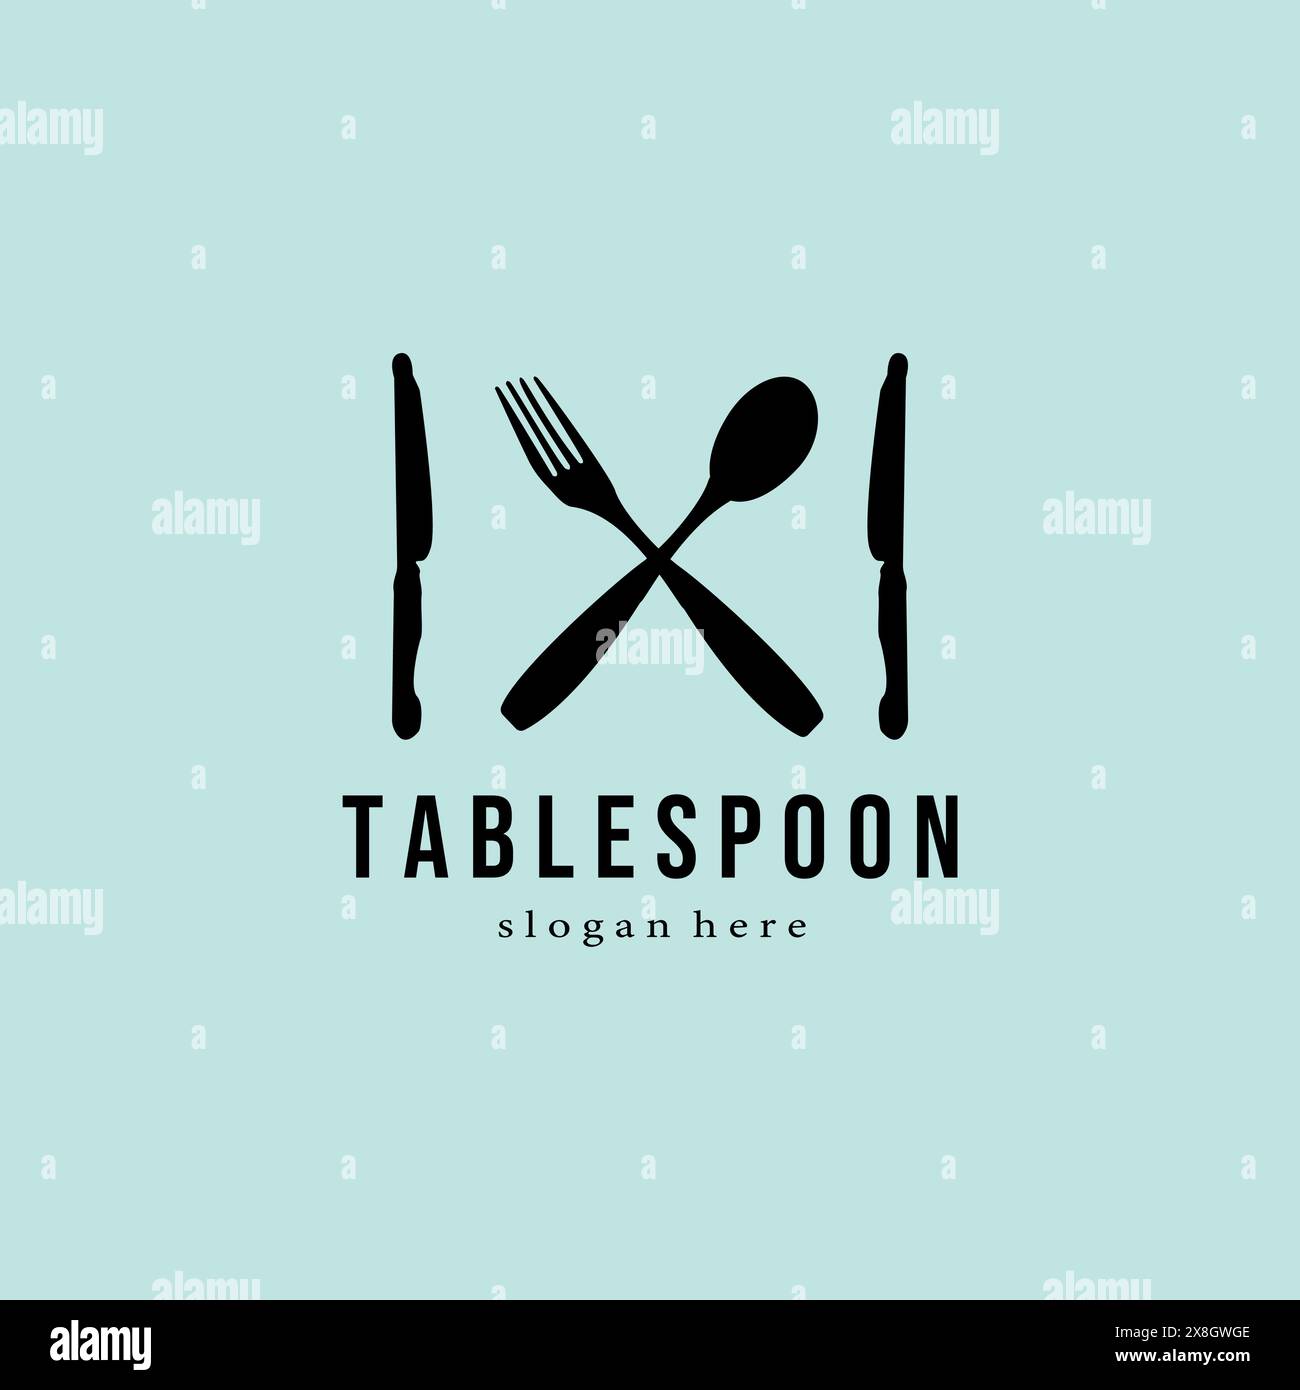 tablespoon line art minimalist logo vector illustration design Stock Vector